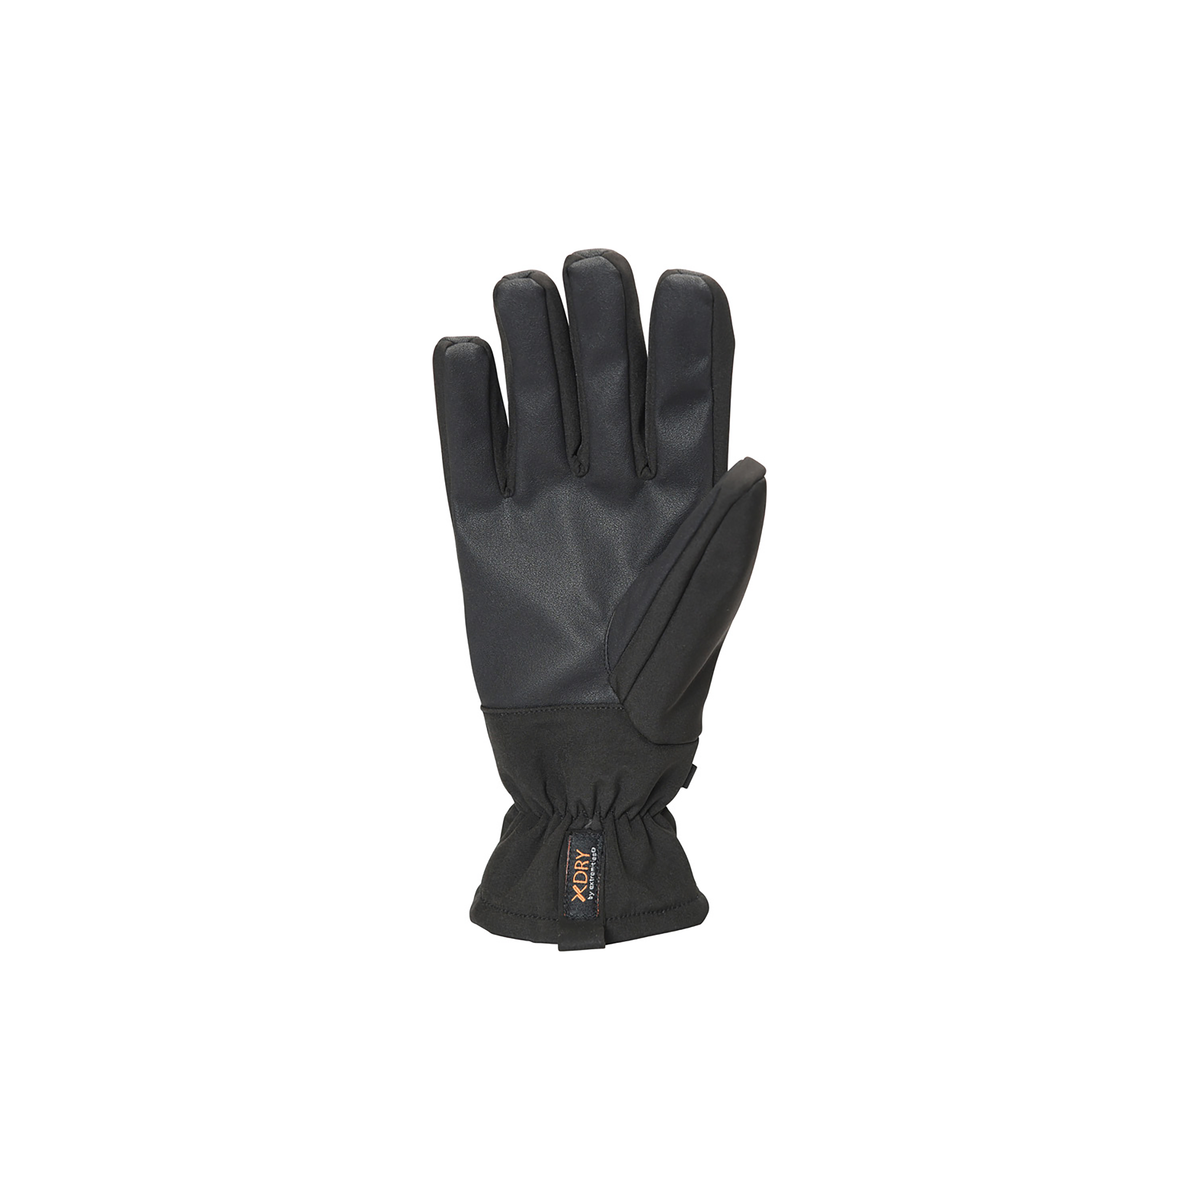 Extremities Bullet Waterproof Insulated Touchscreen Glove - Black